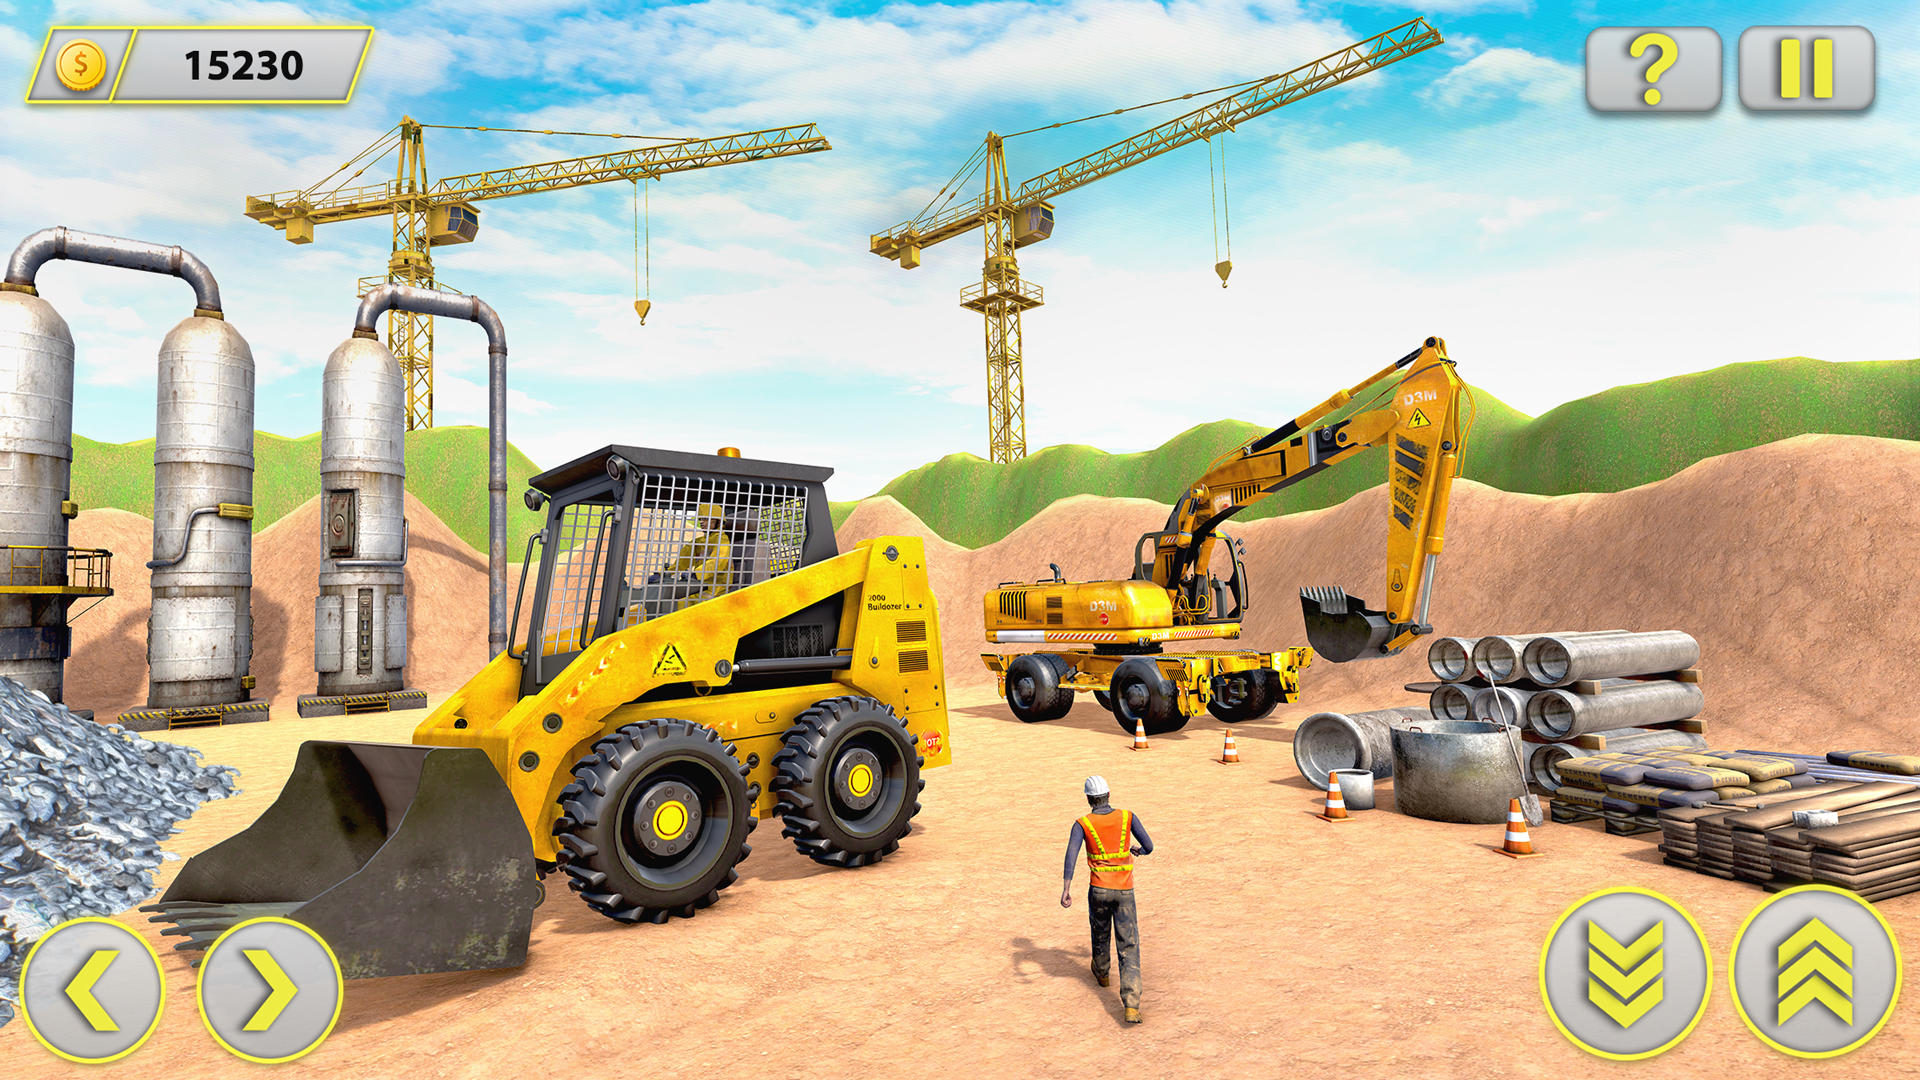 Screenshot 1 of City Construction Simulator 3d 2.6